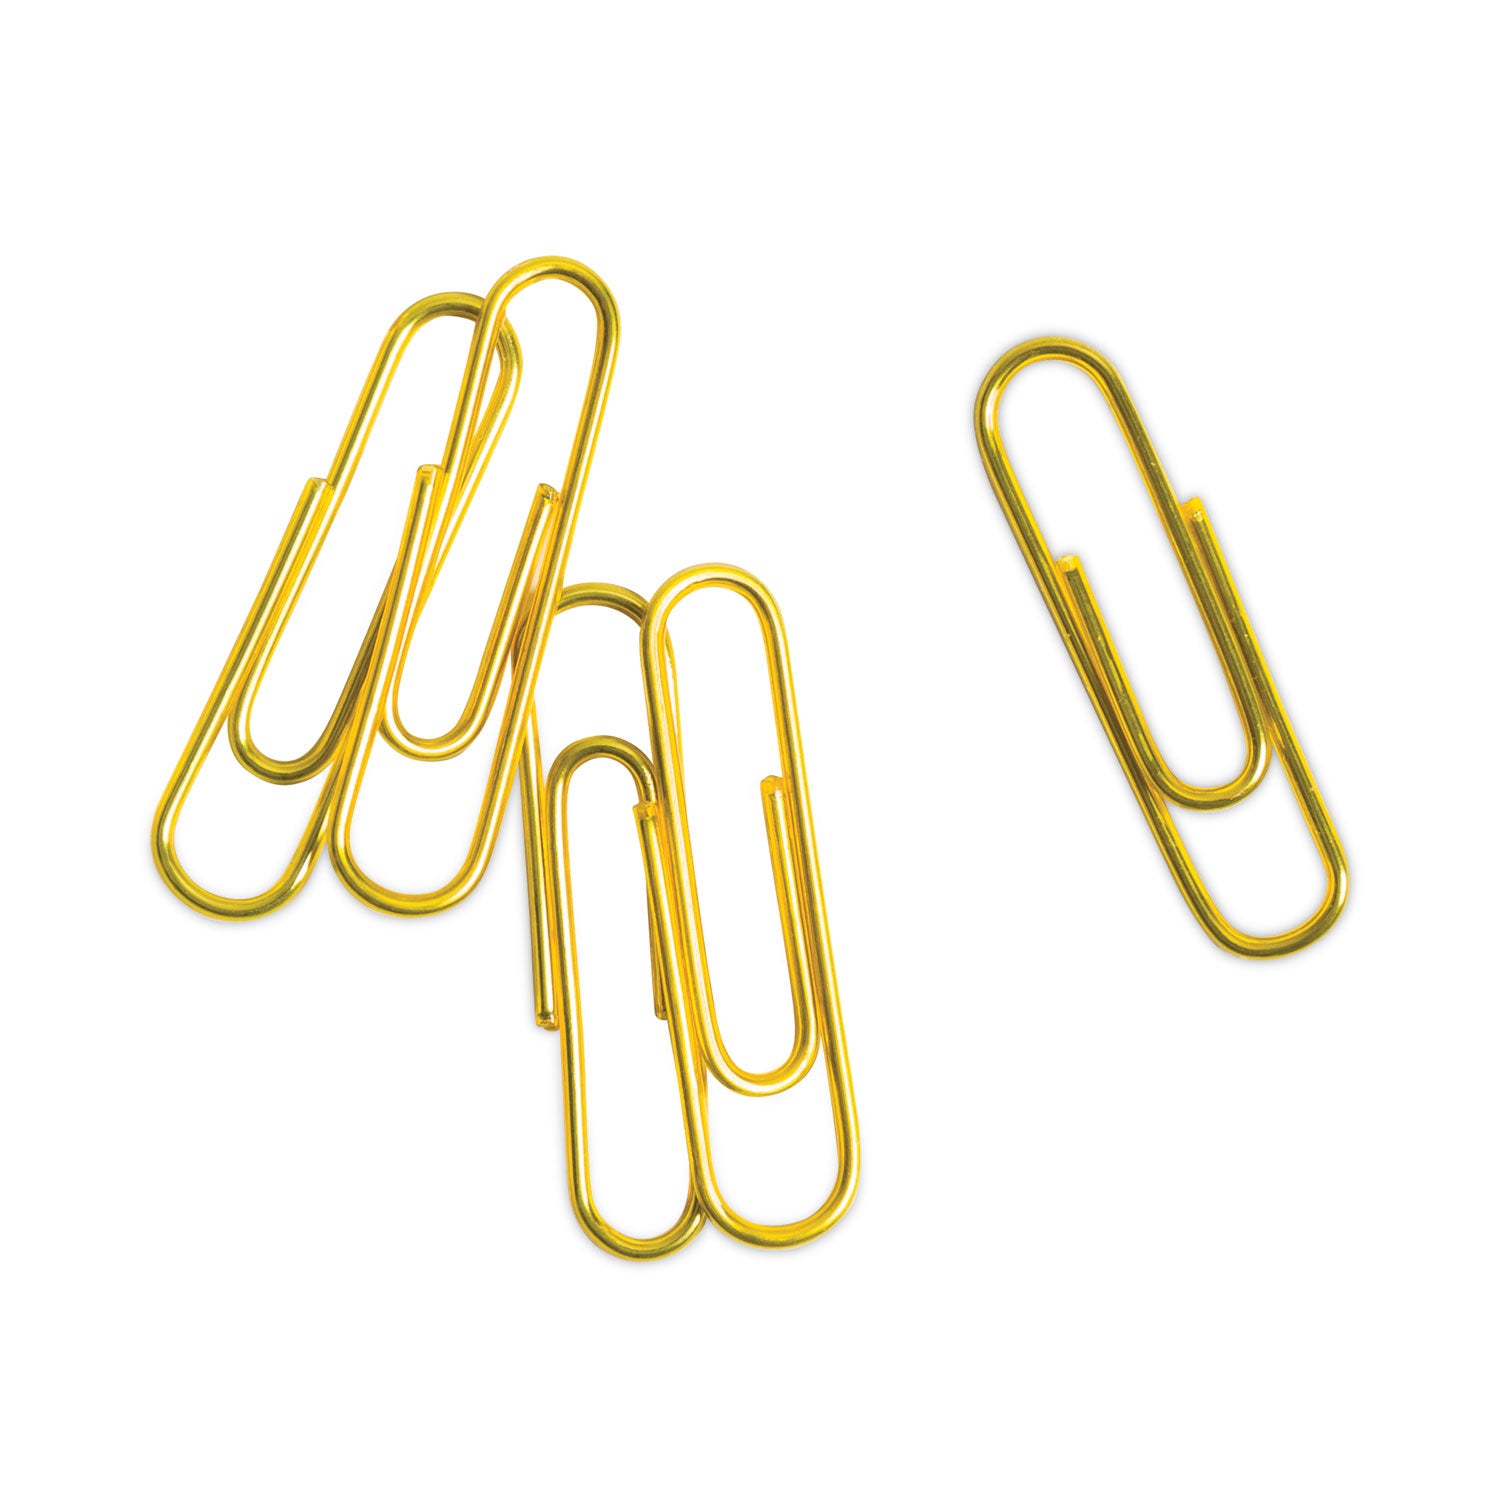 paper-clips-medium-vinyl-coated-gold-200-clips-box-5-boxes-pack_ubr3619u0624 - 2